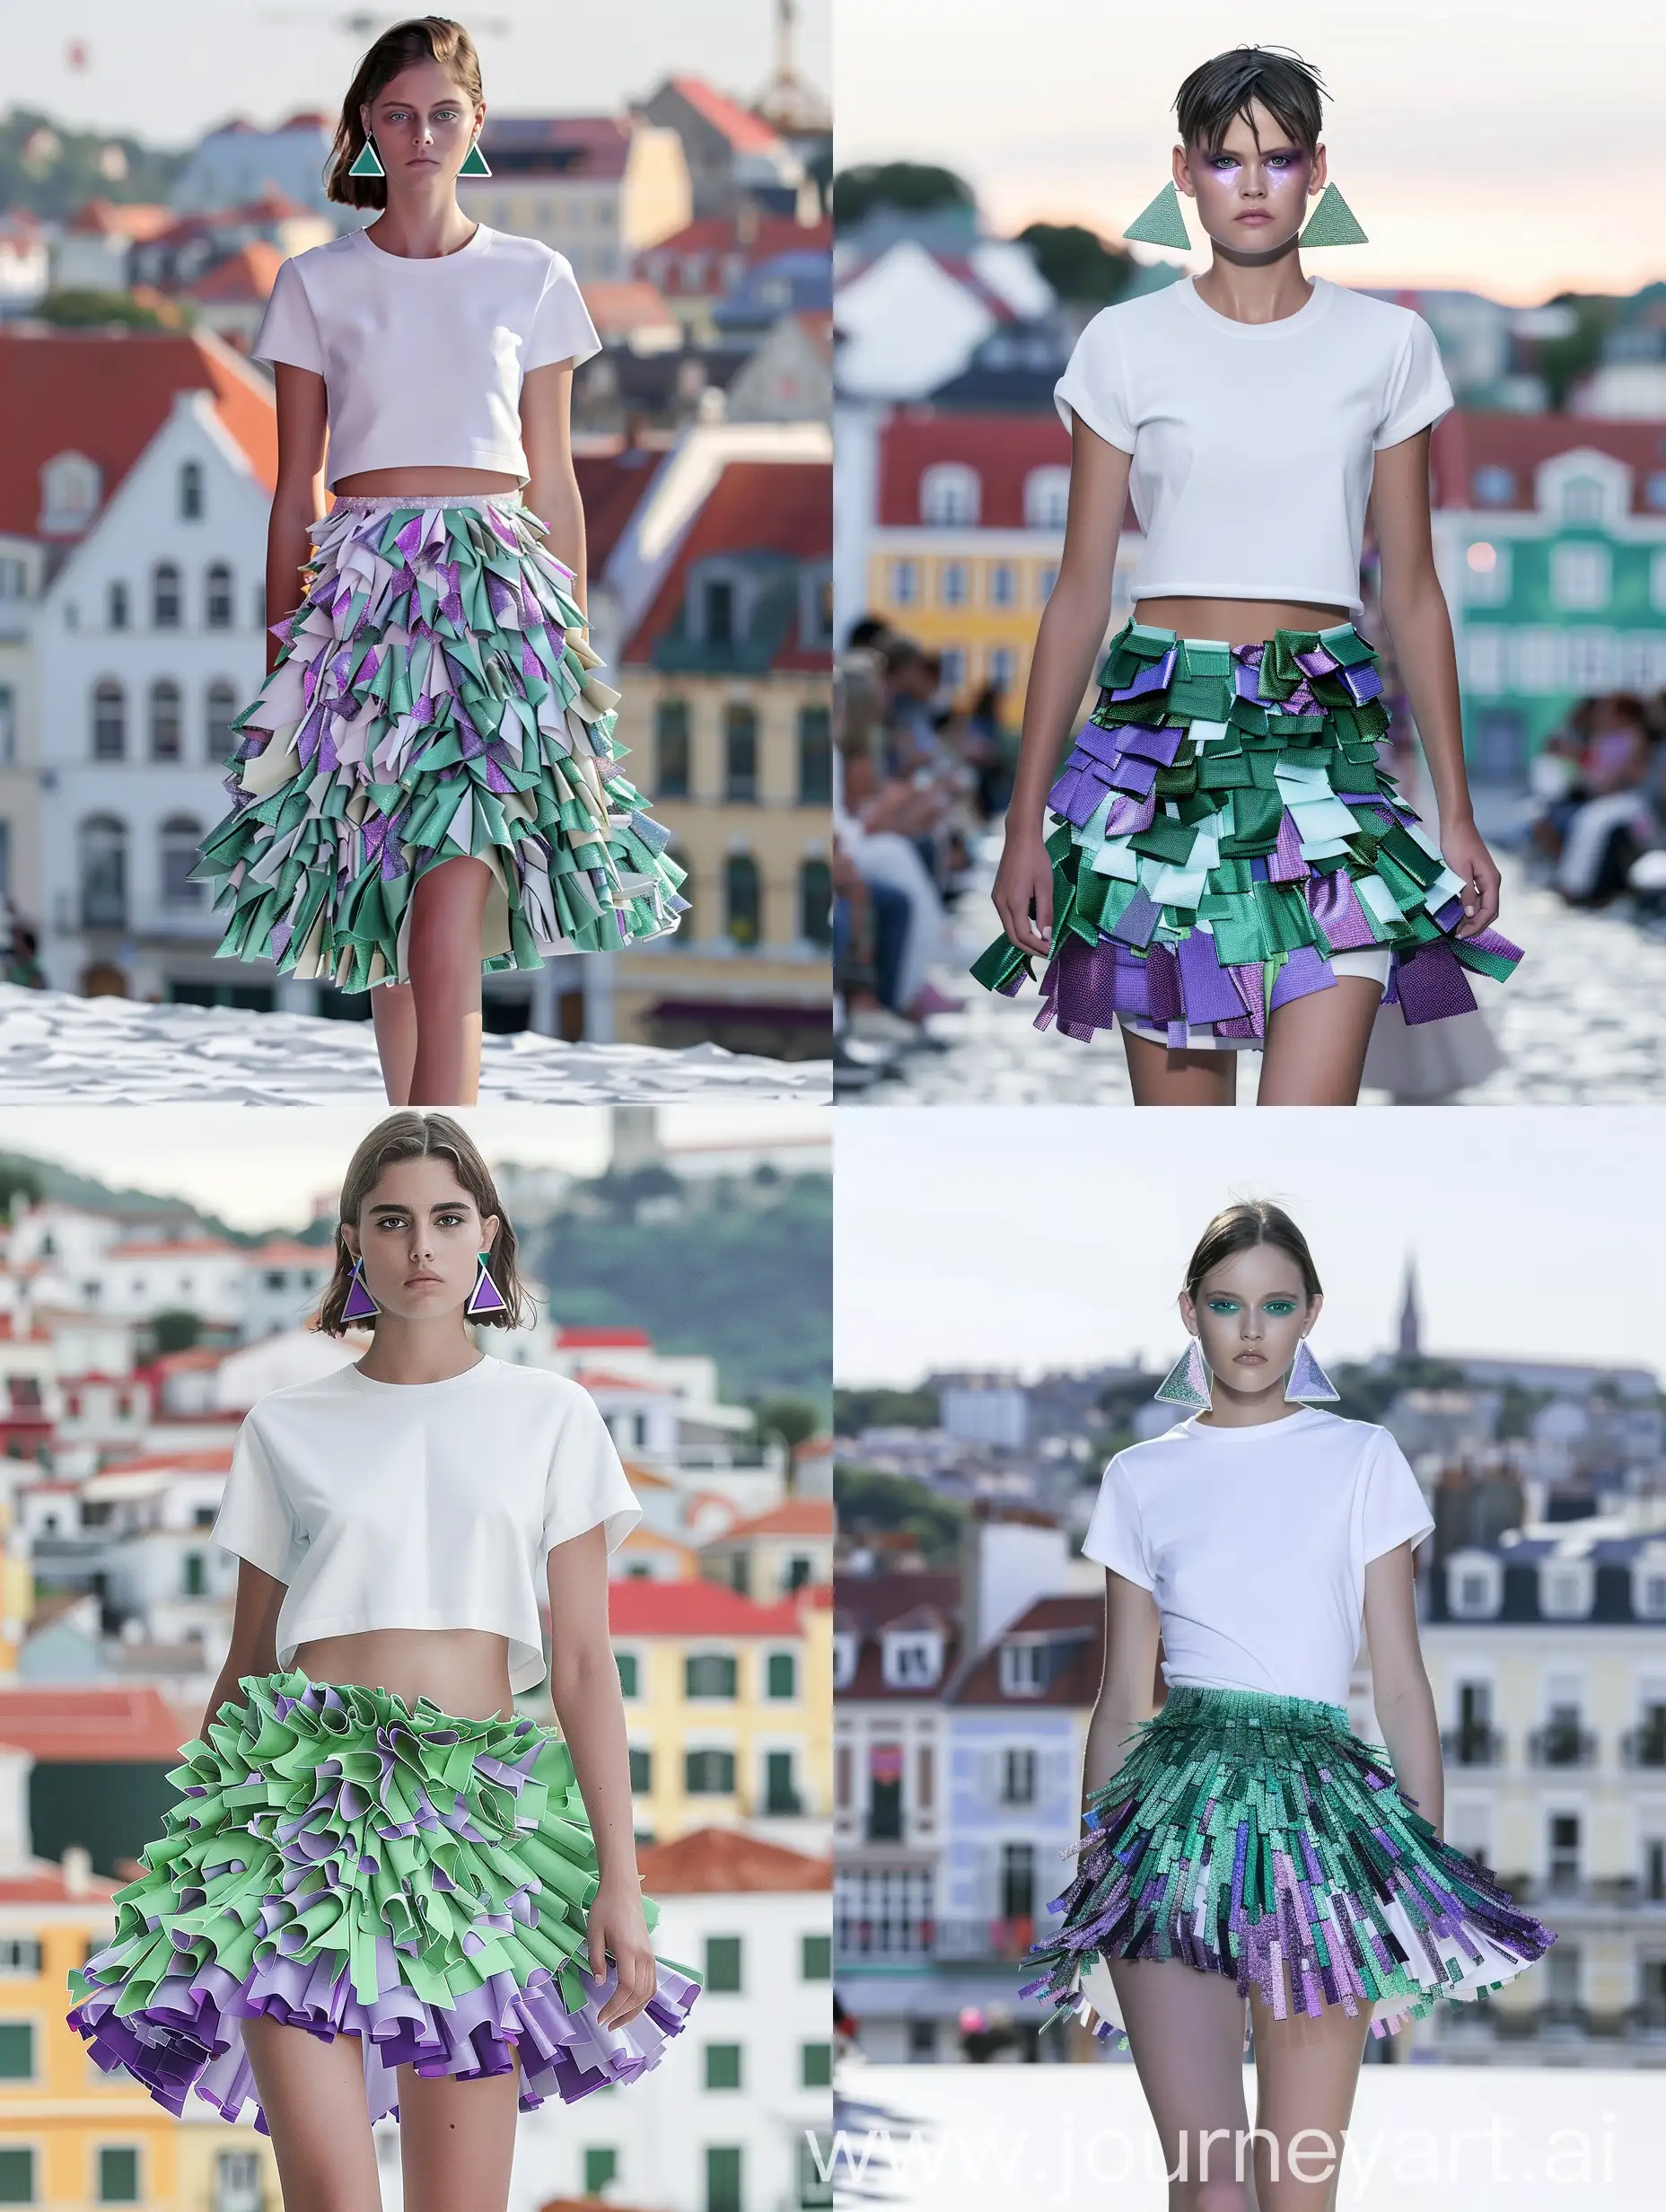 Stylish-Model-Strides-in-Vibrant-Skirt-on-Urban-Runway